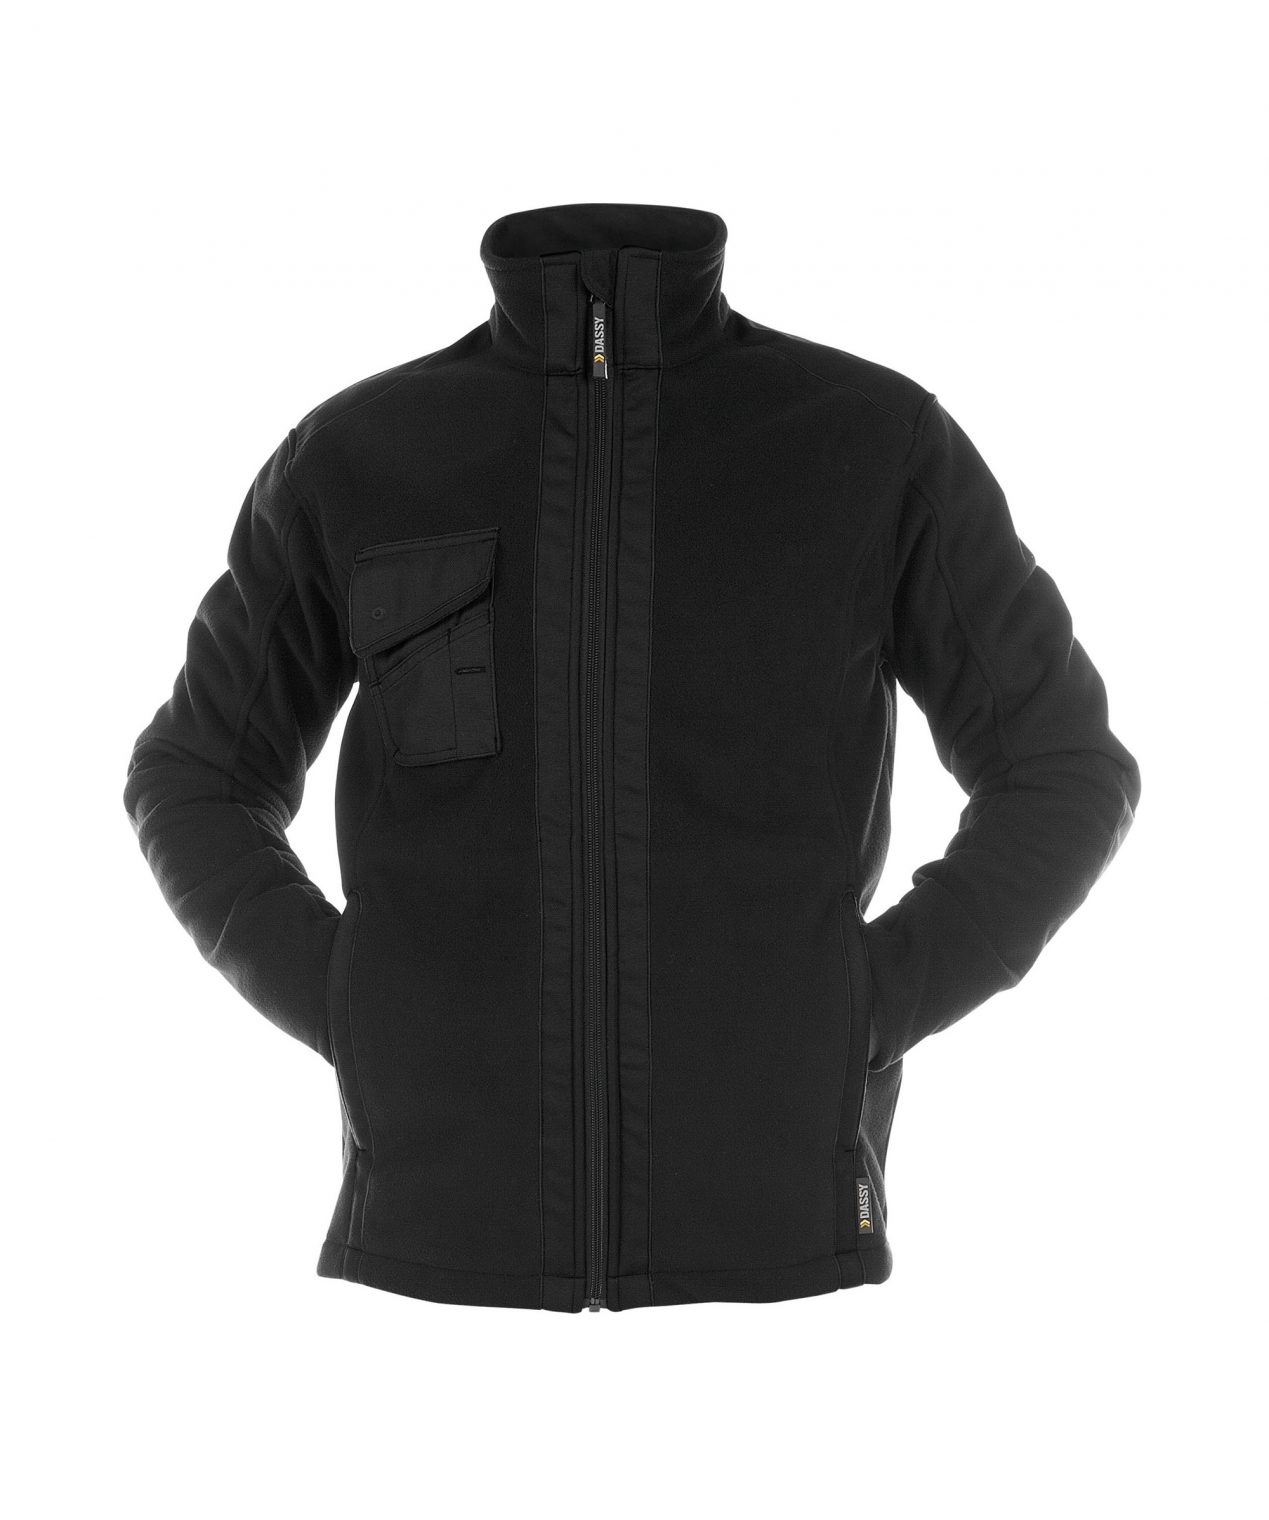 croft three layered fleece jacket black front